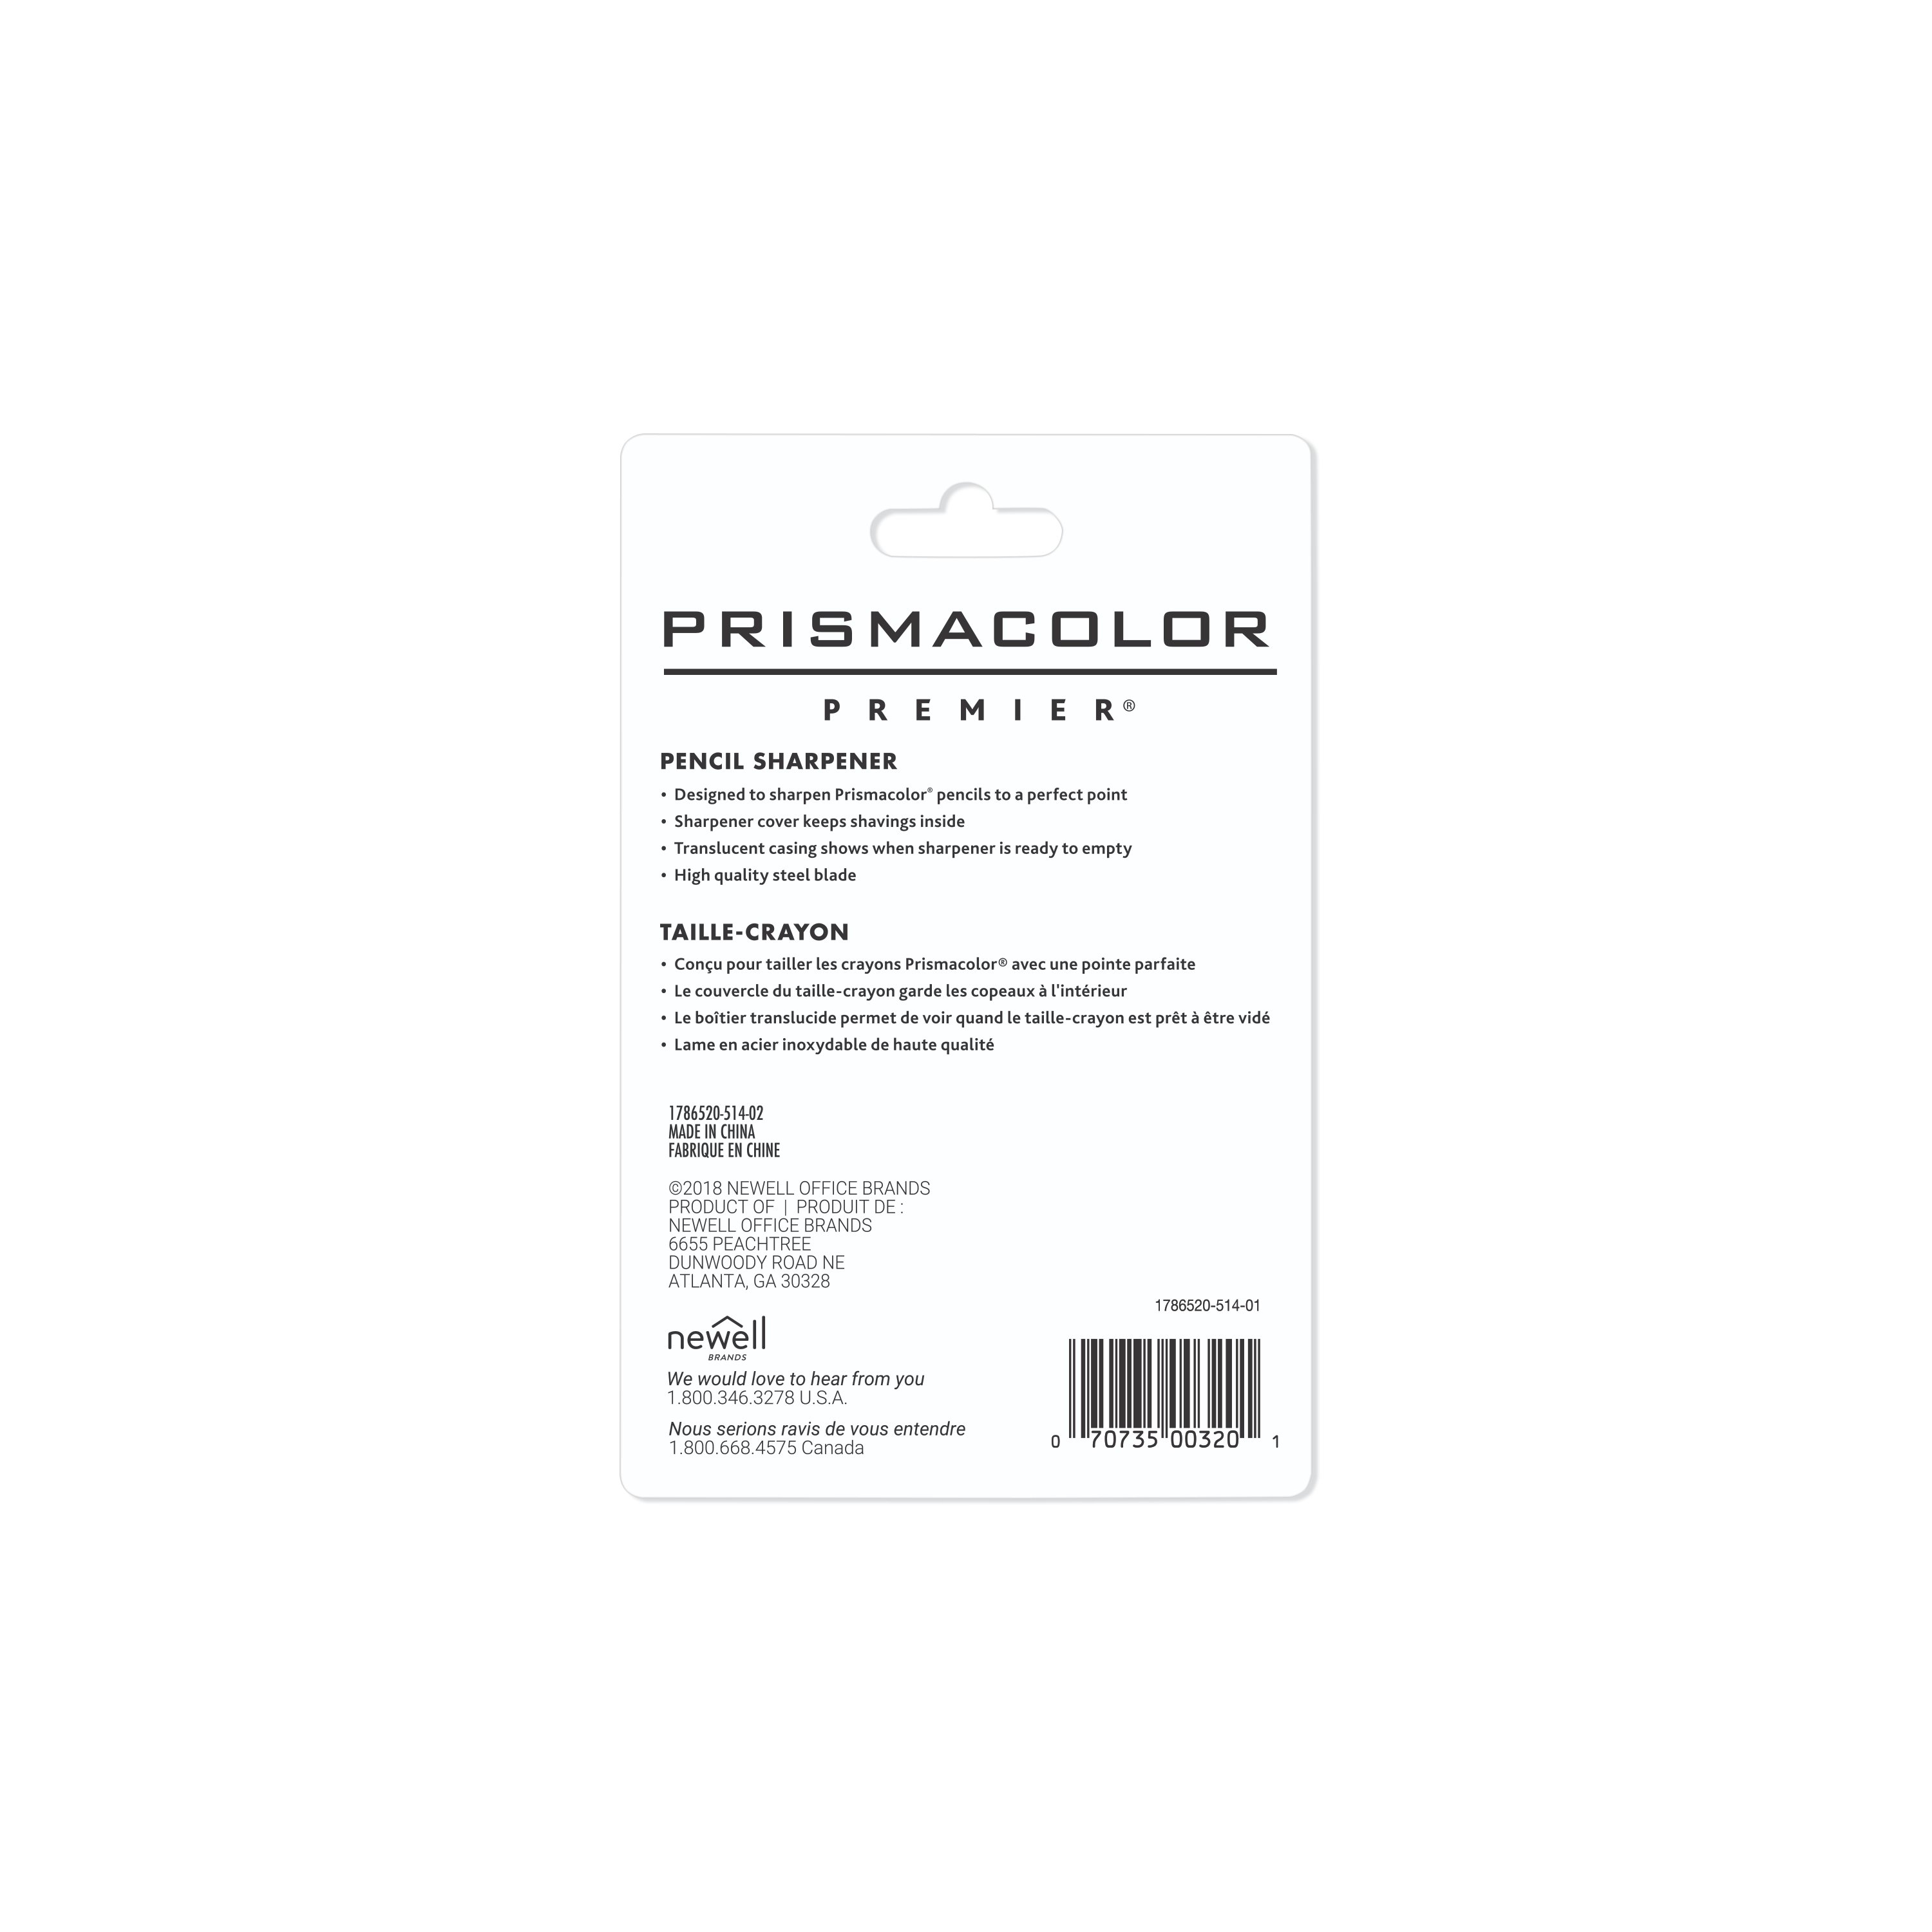  Prismacolor Scholar Pencil Sharpener, 8 Count : Office Products